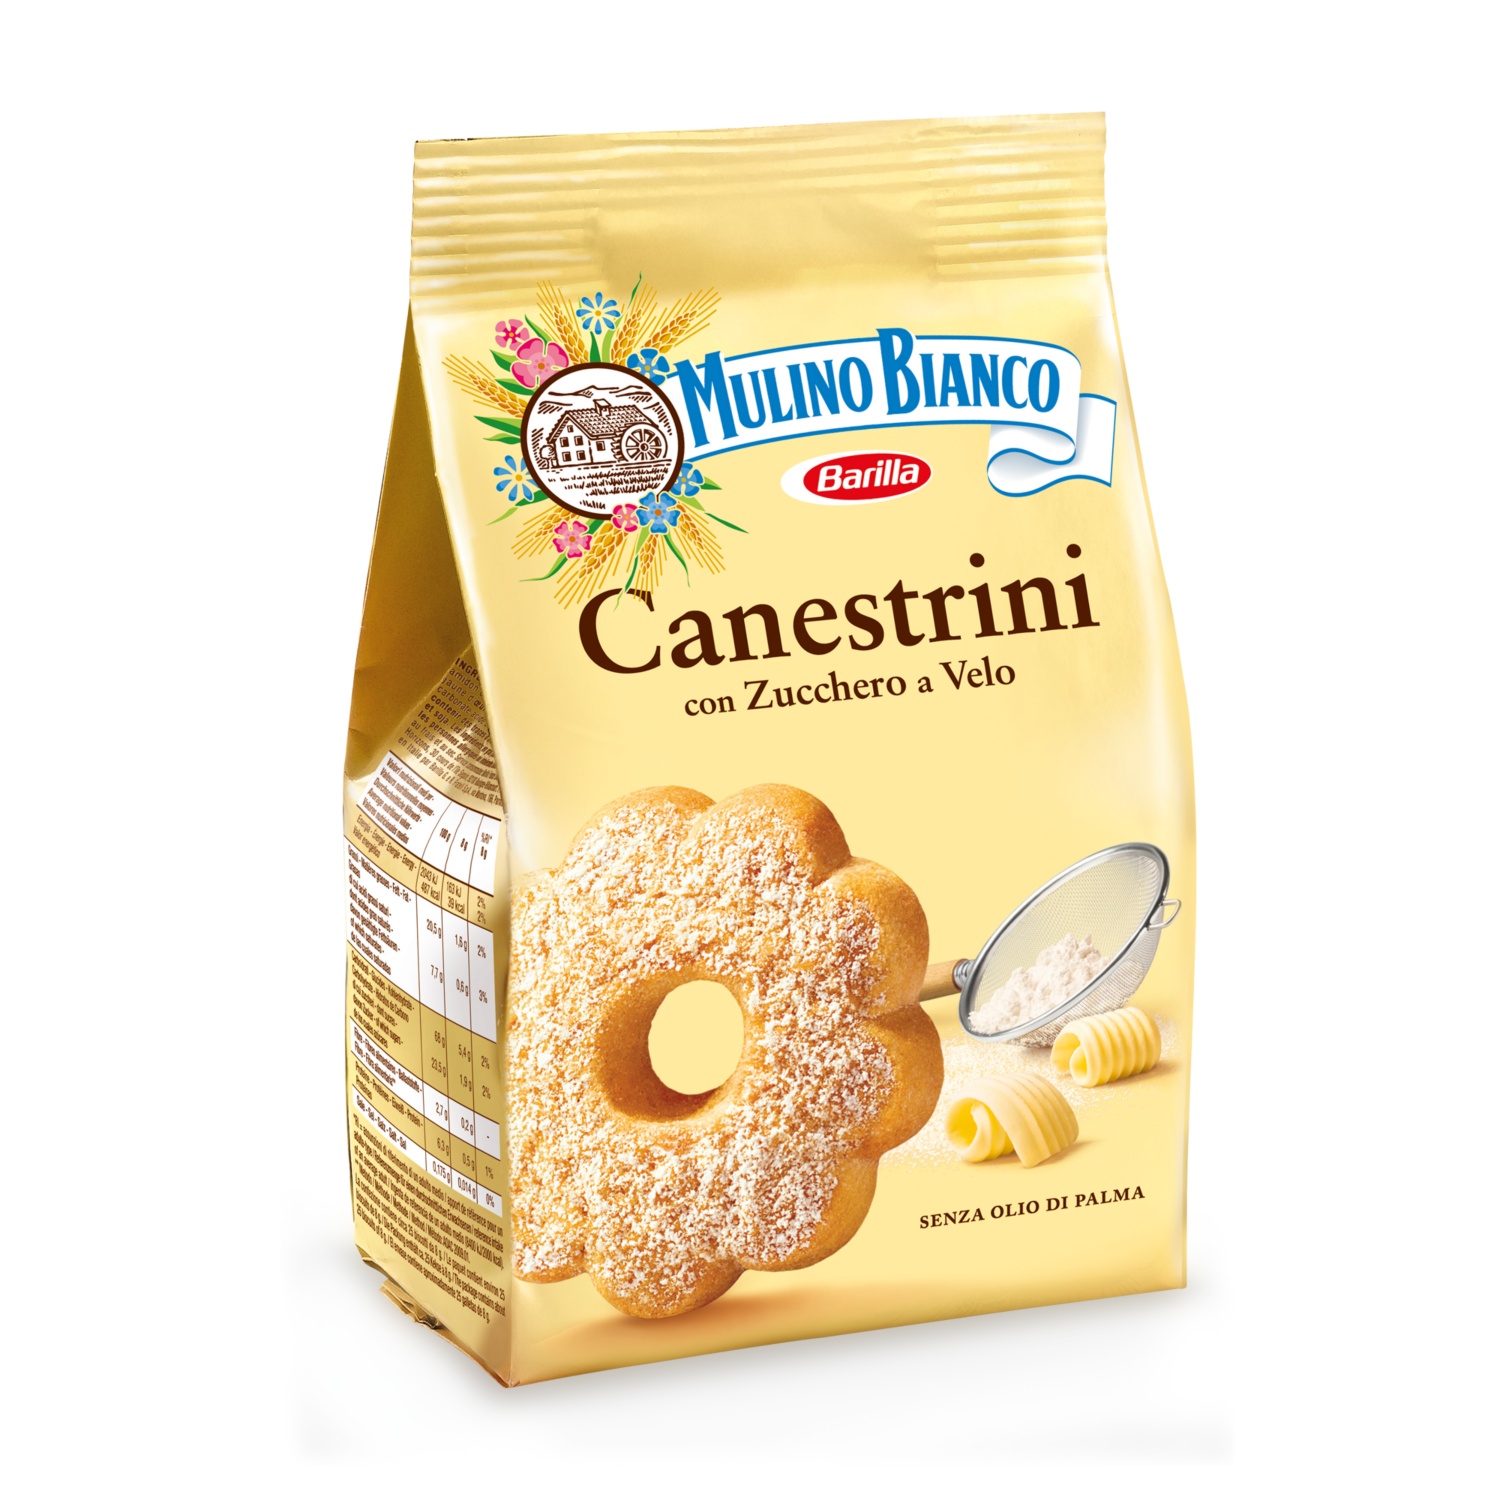 MULINO BIANCO Italienische Kekse, Canestrini